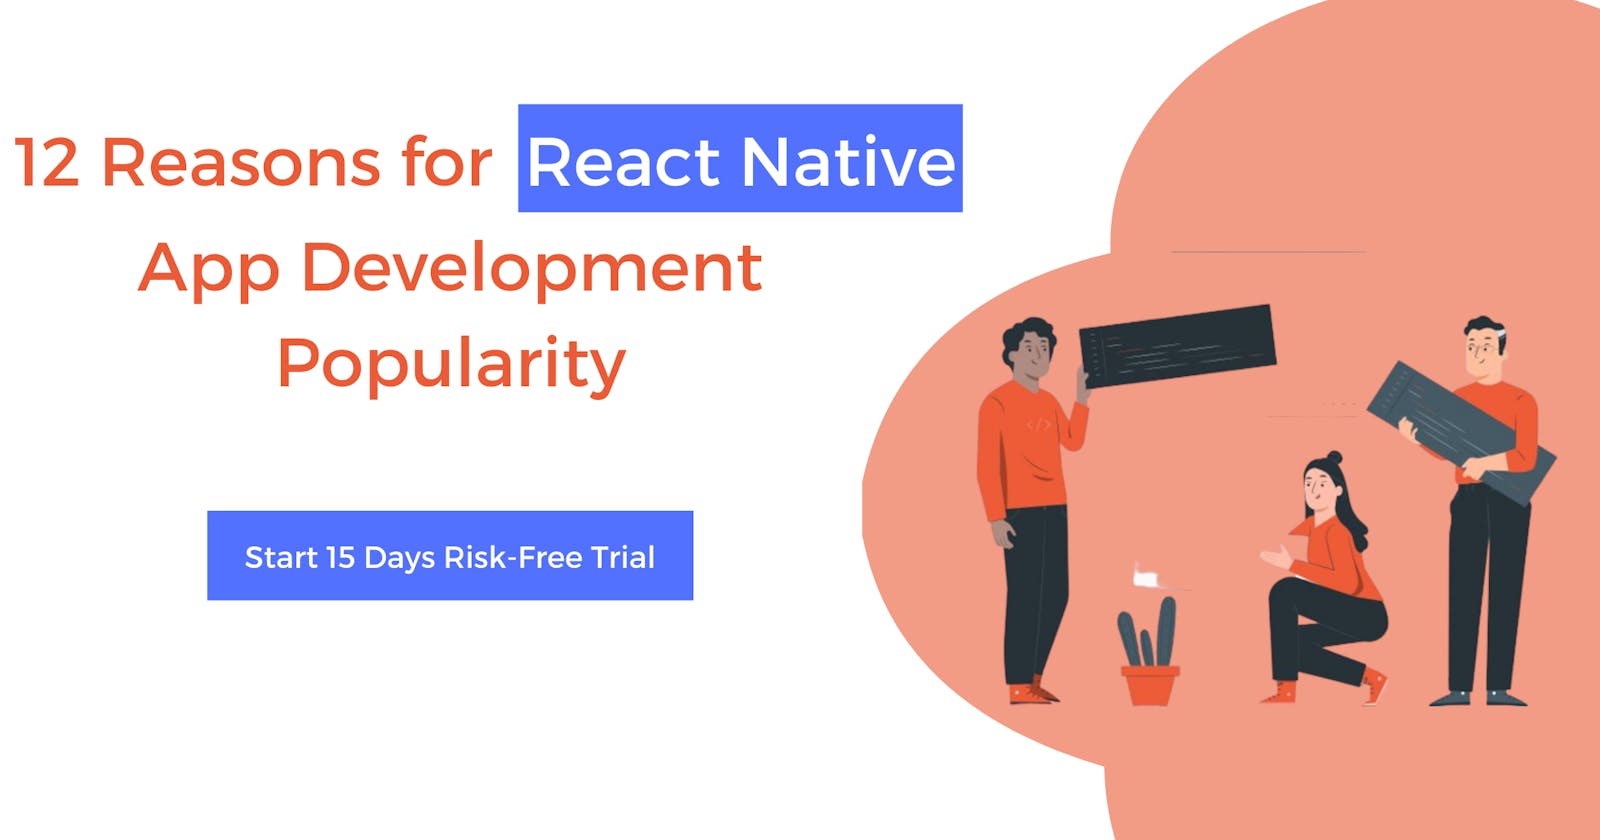 12 Reasons for React Native App Development Popularity